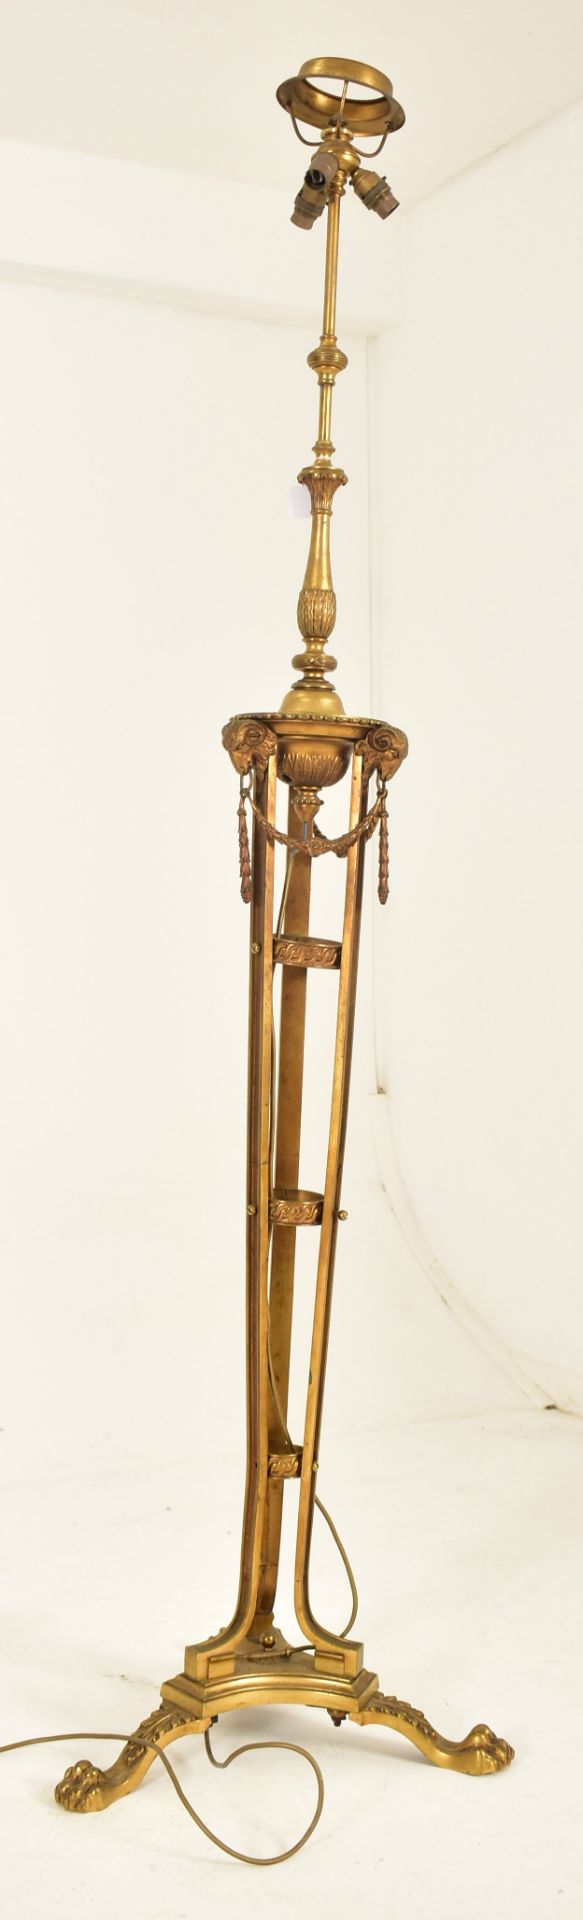 NEO-CLASSICAL INSPIRED BRASSED METAL FLOOR LAMP - Image 5 of 6